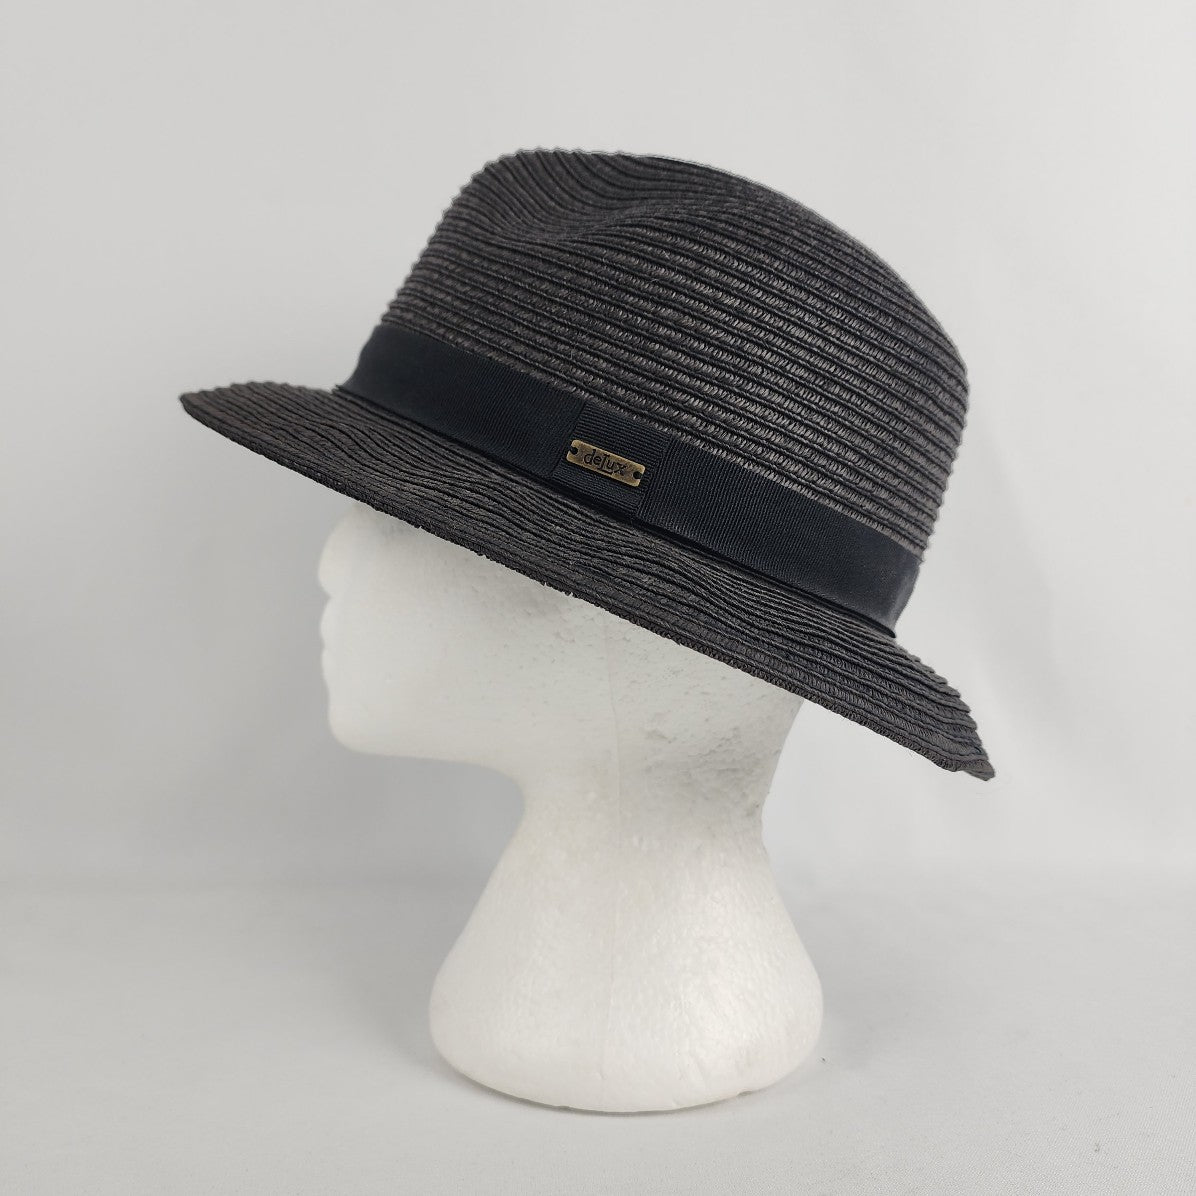 Delux Black Woven Paper Fedora Hat